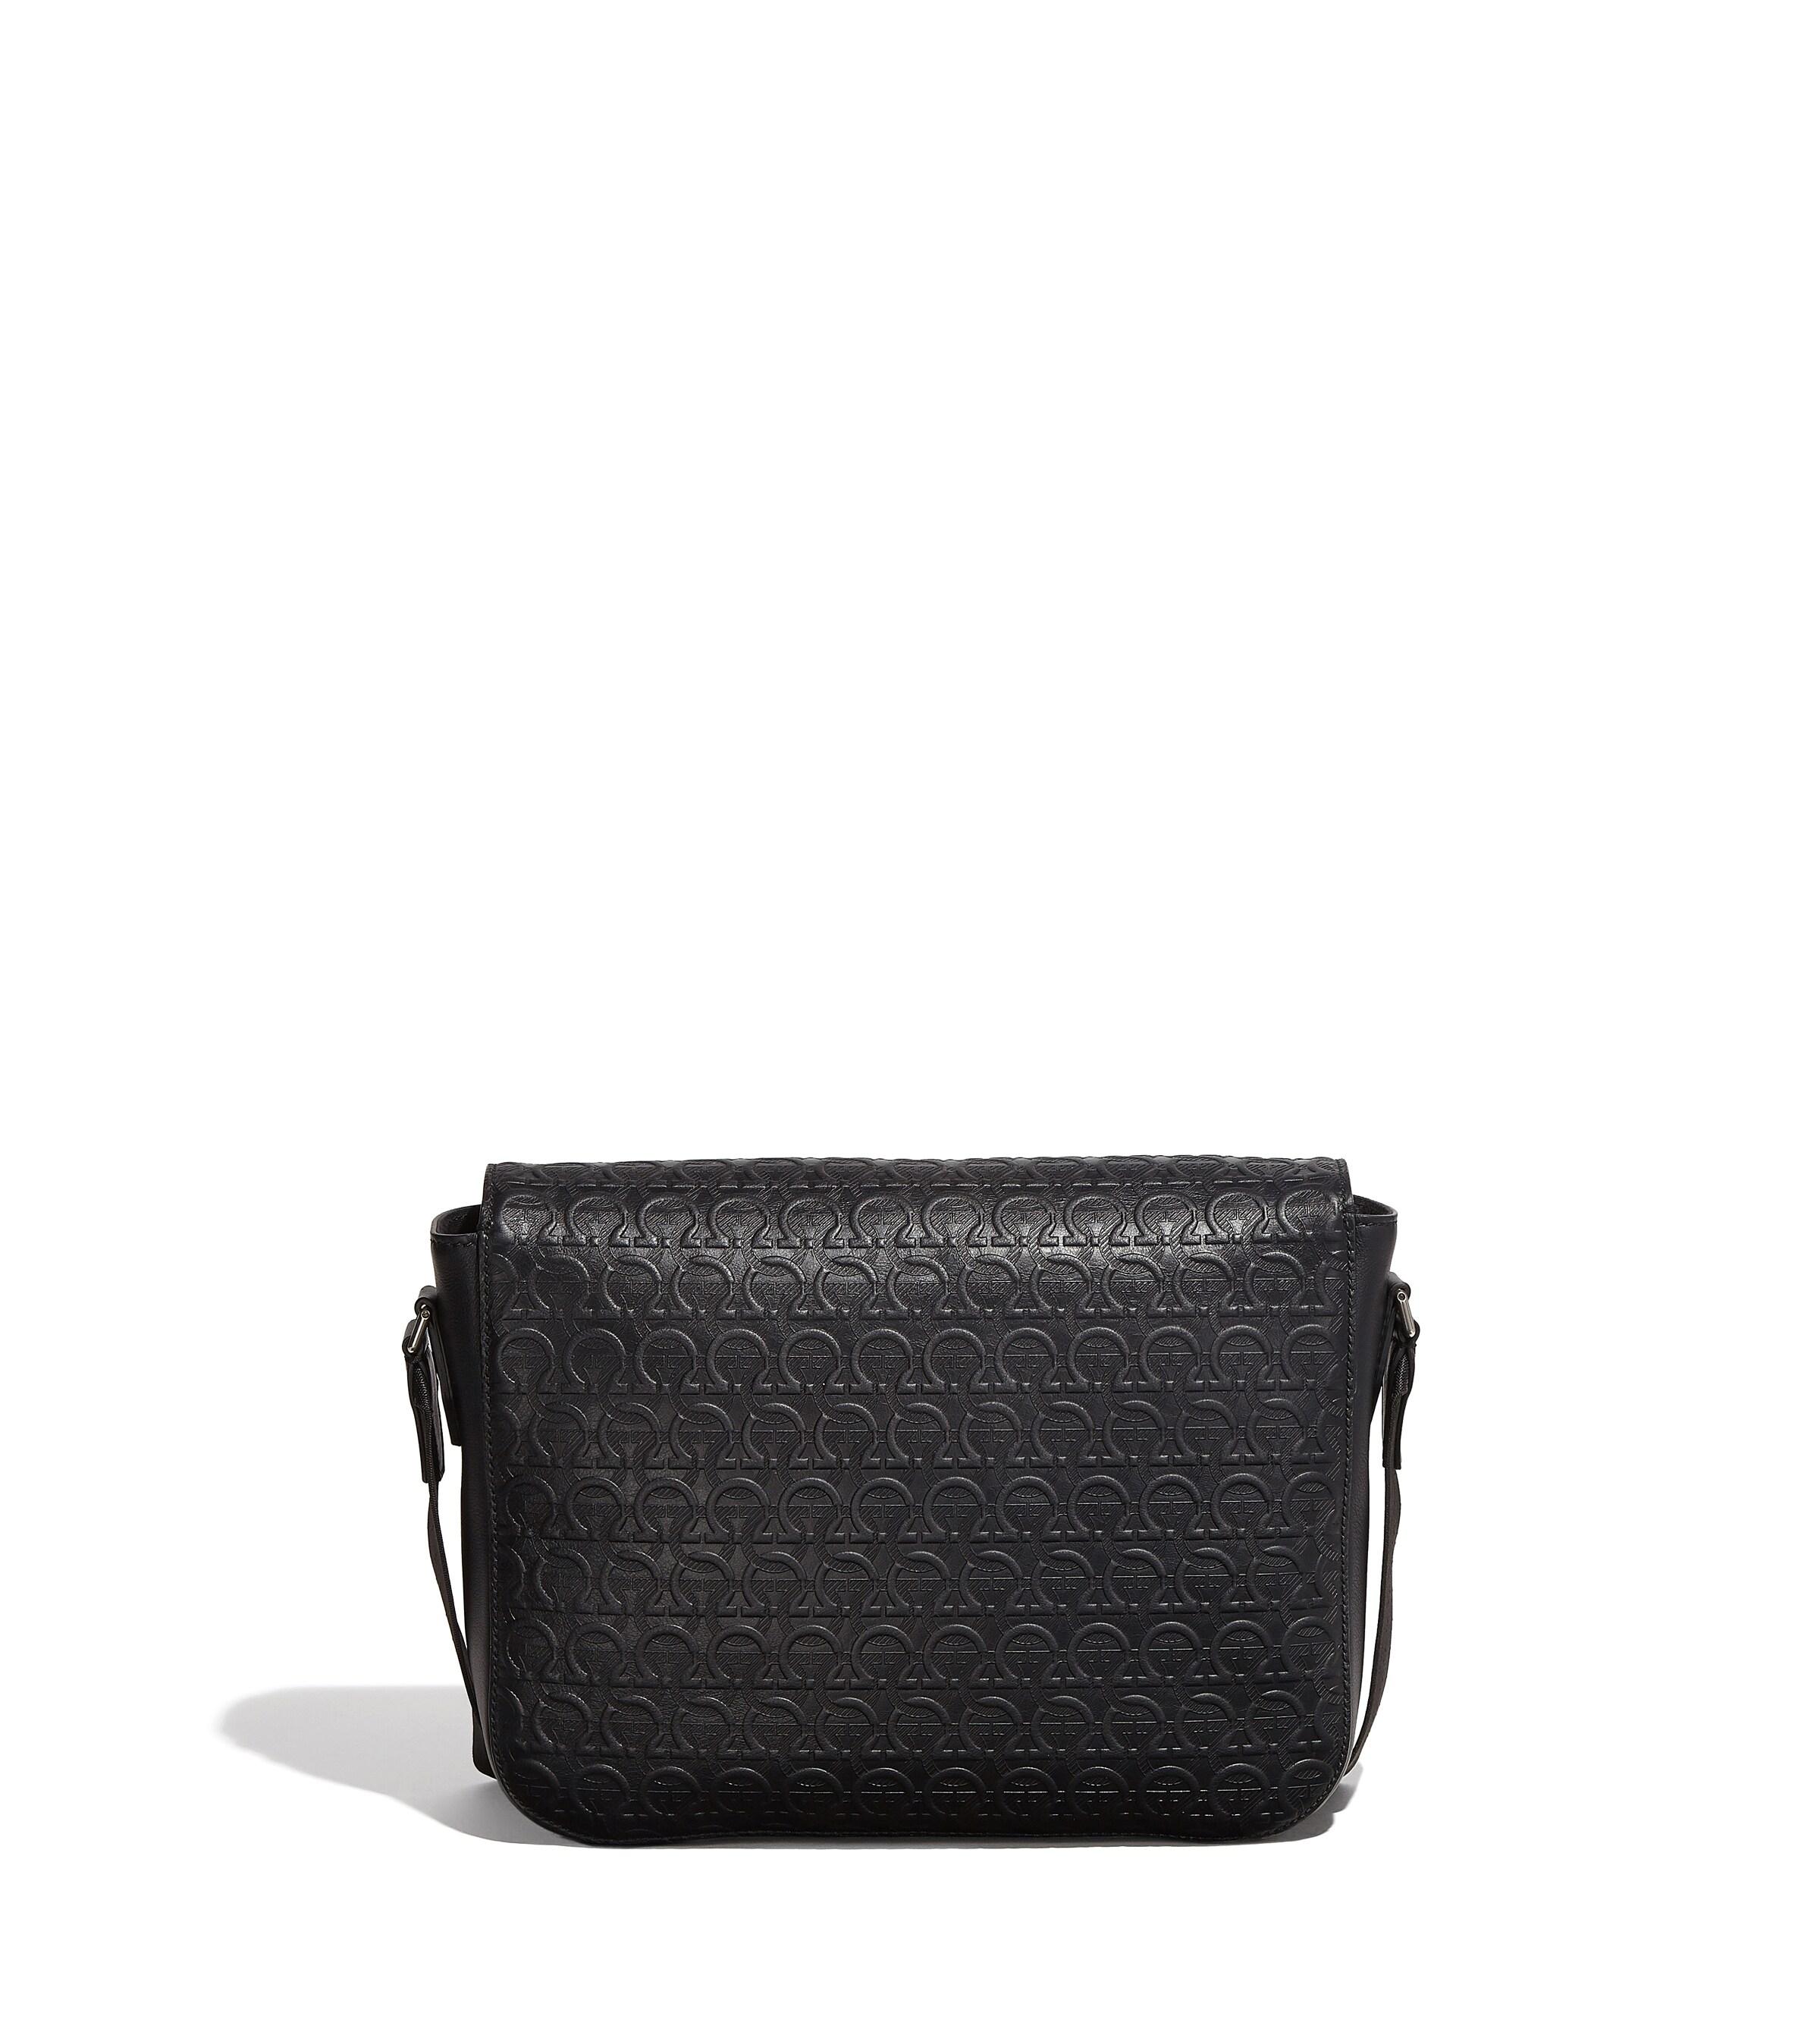 Ferragamo Leather Gancini Messenger Bag in Black for Men - Lyst